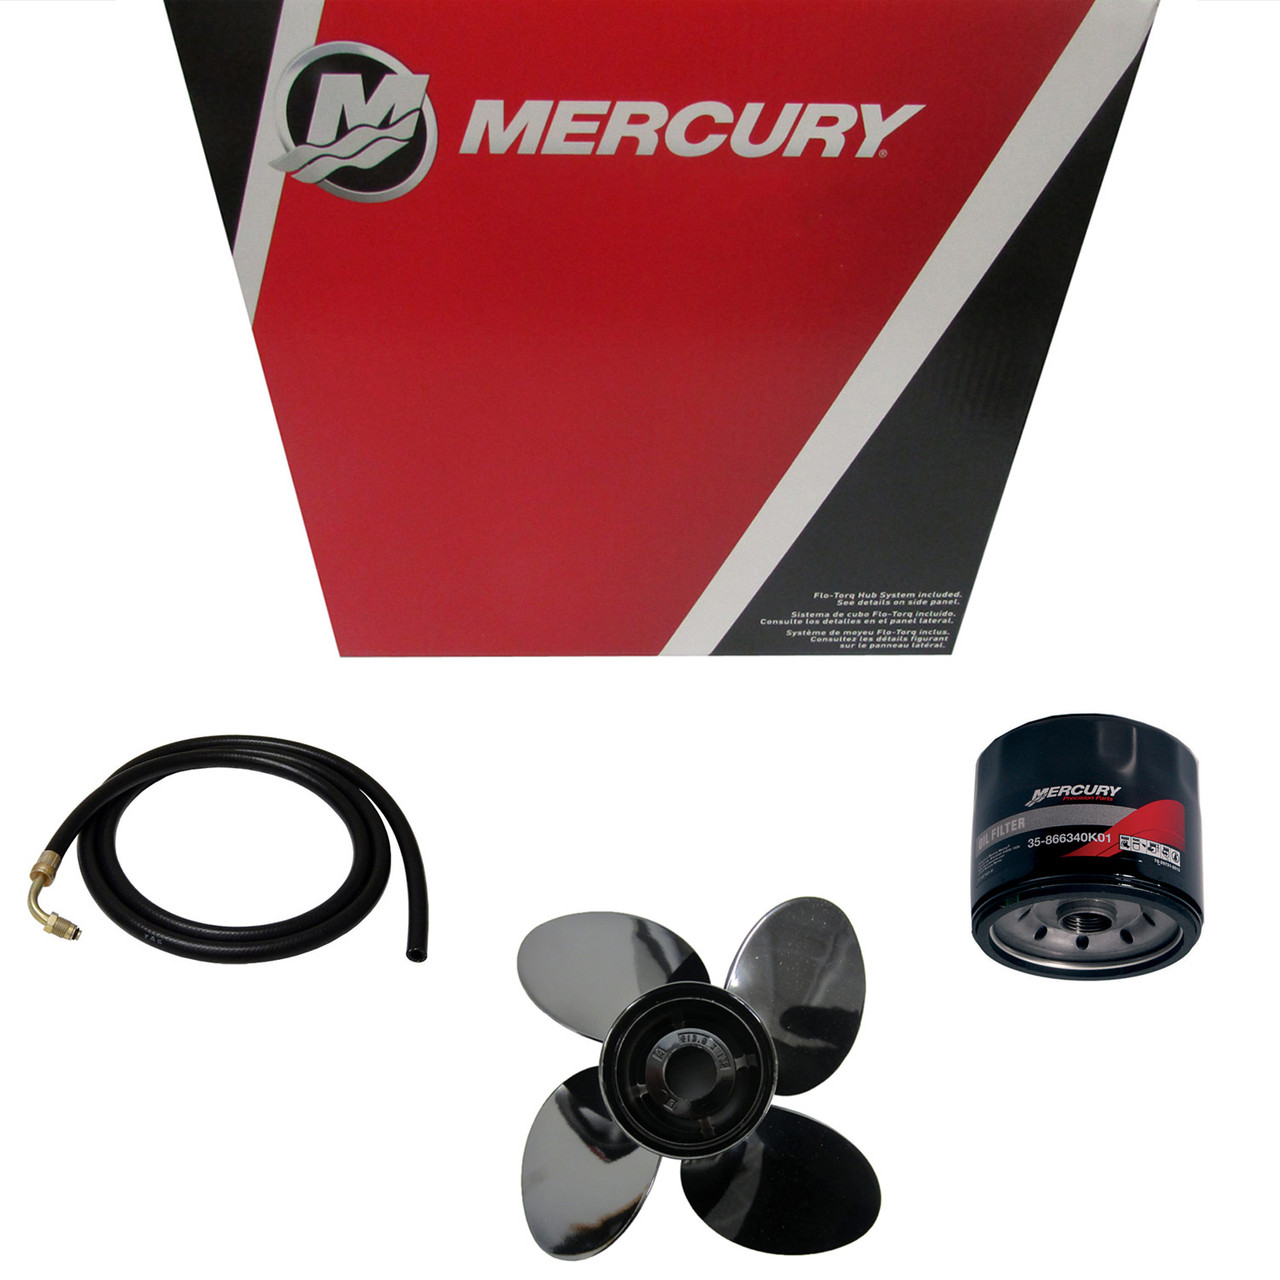 Mercury Marine / Mercruiser New OEM Trophy+ 13.75X19, 48-8M0151390